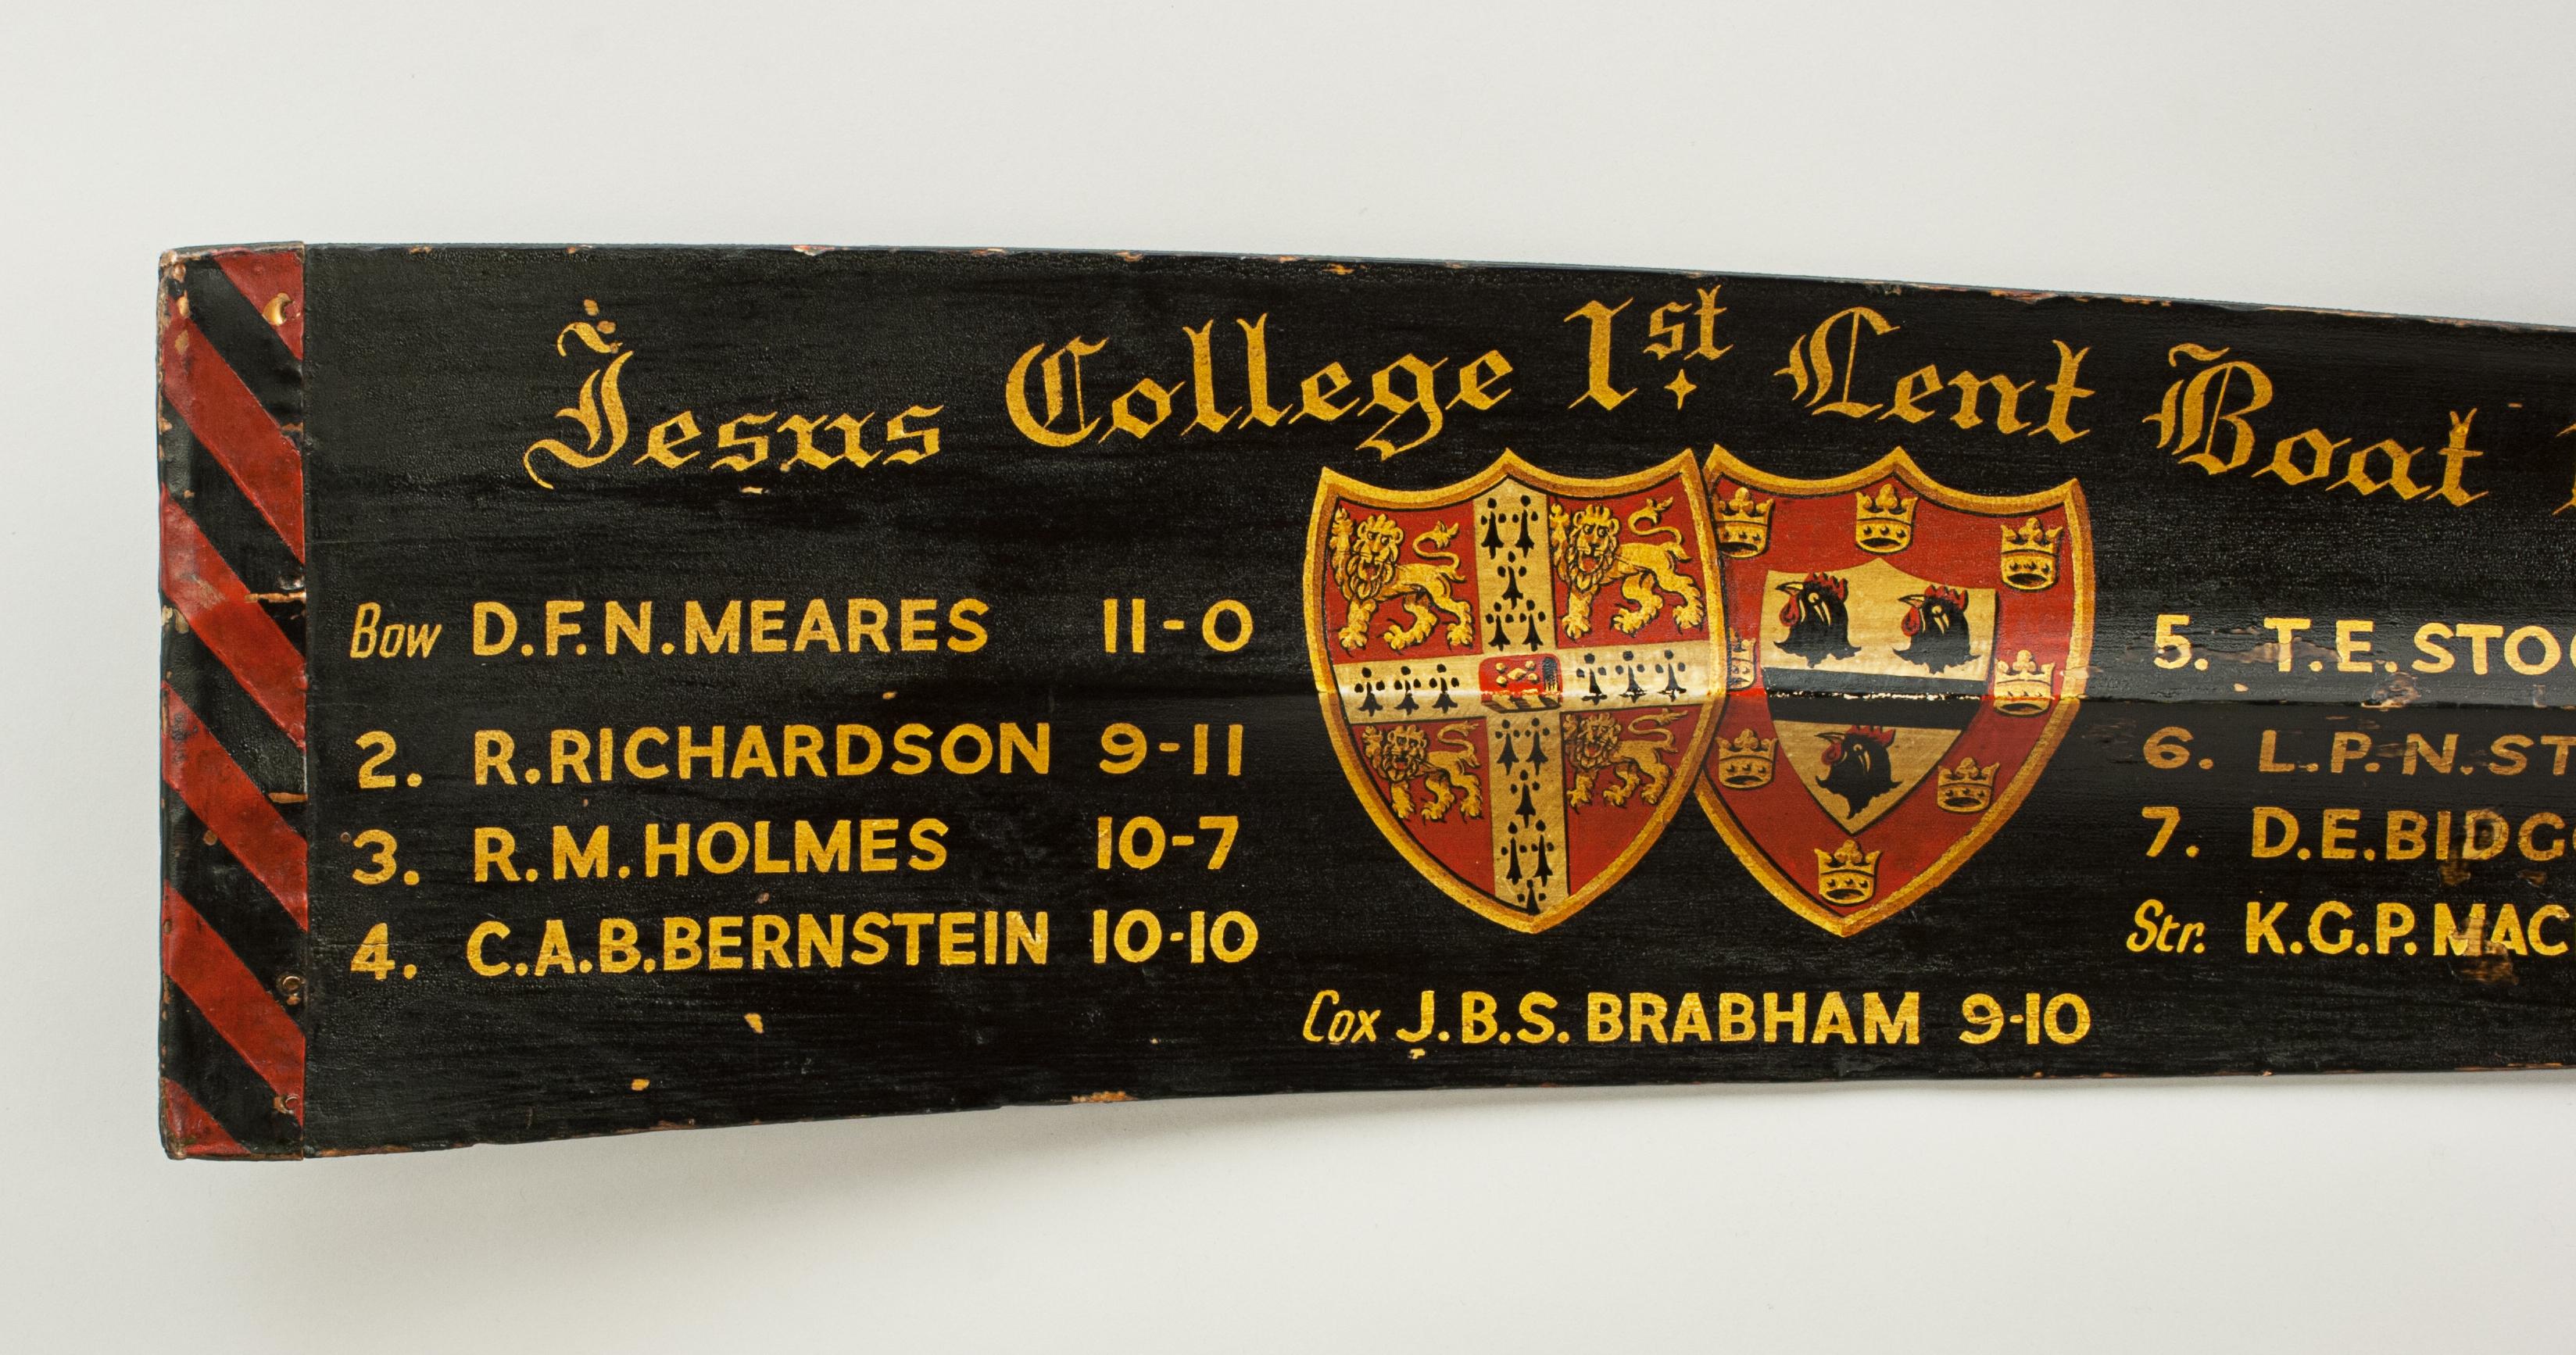 Cambridge presentation oar tip, Trophy Blade, Jesus College 1944.
The oar is an original traditional Jesus College 